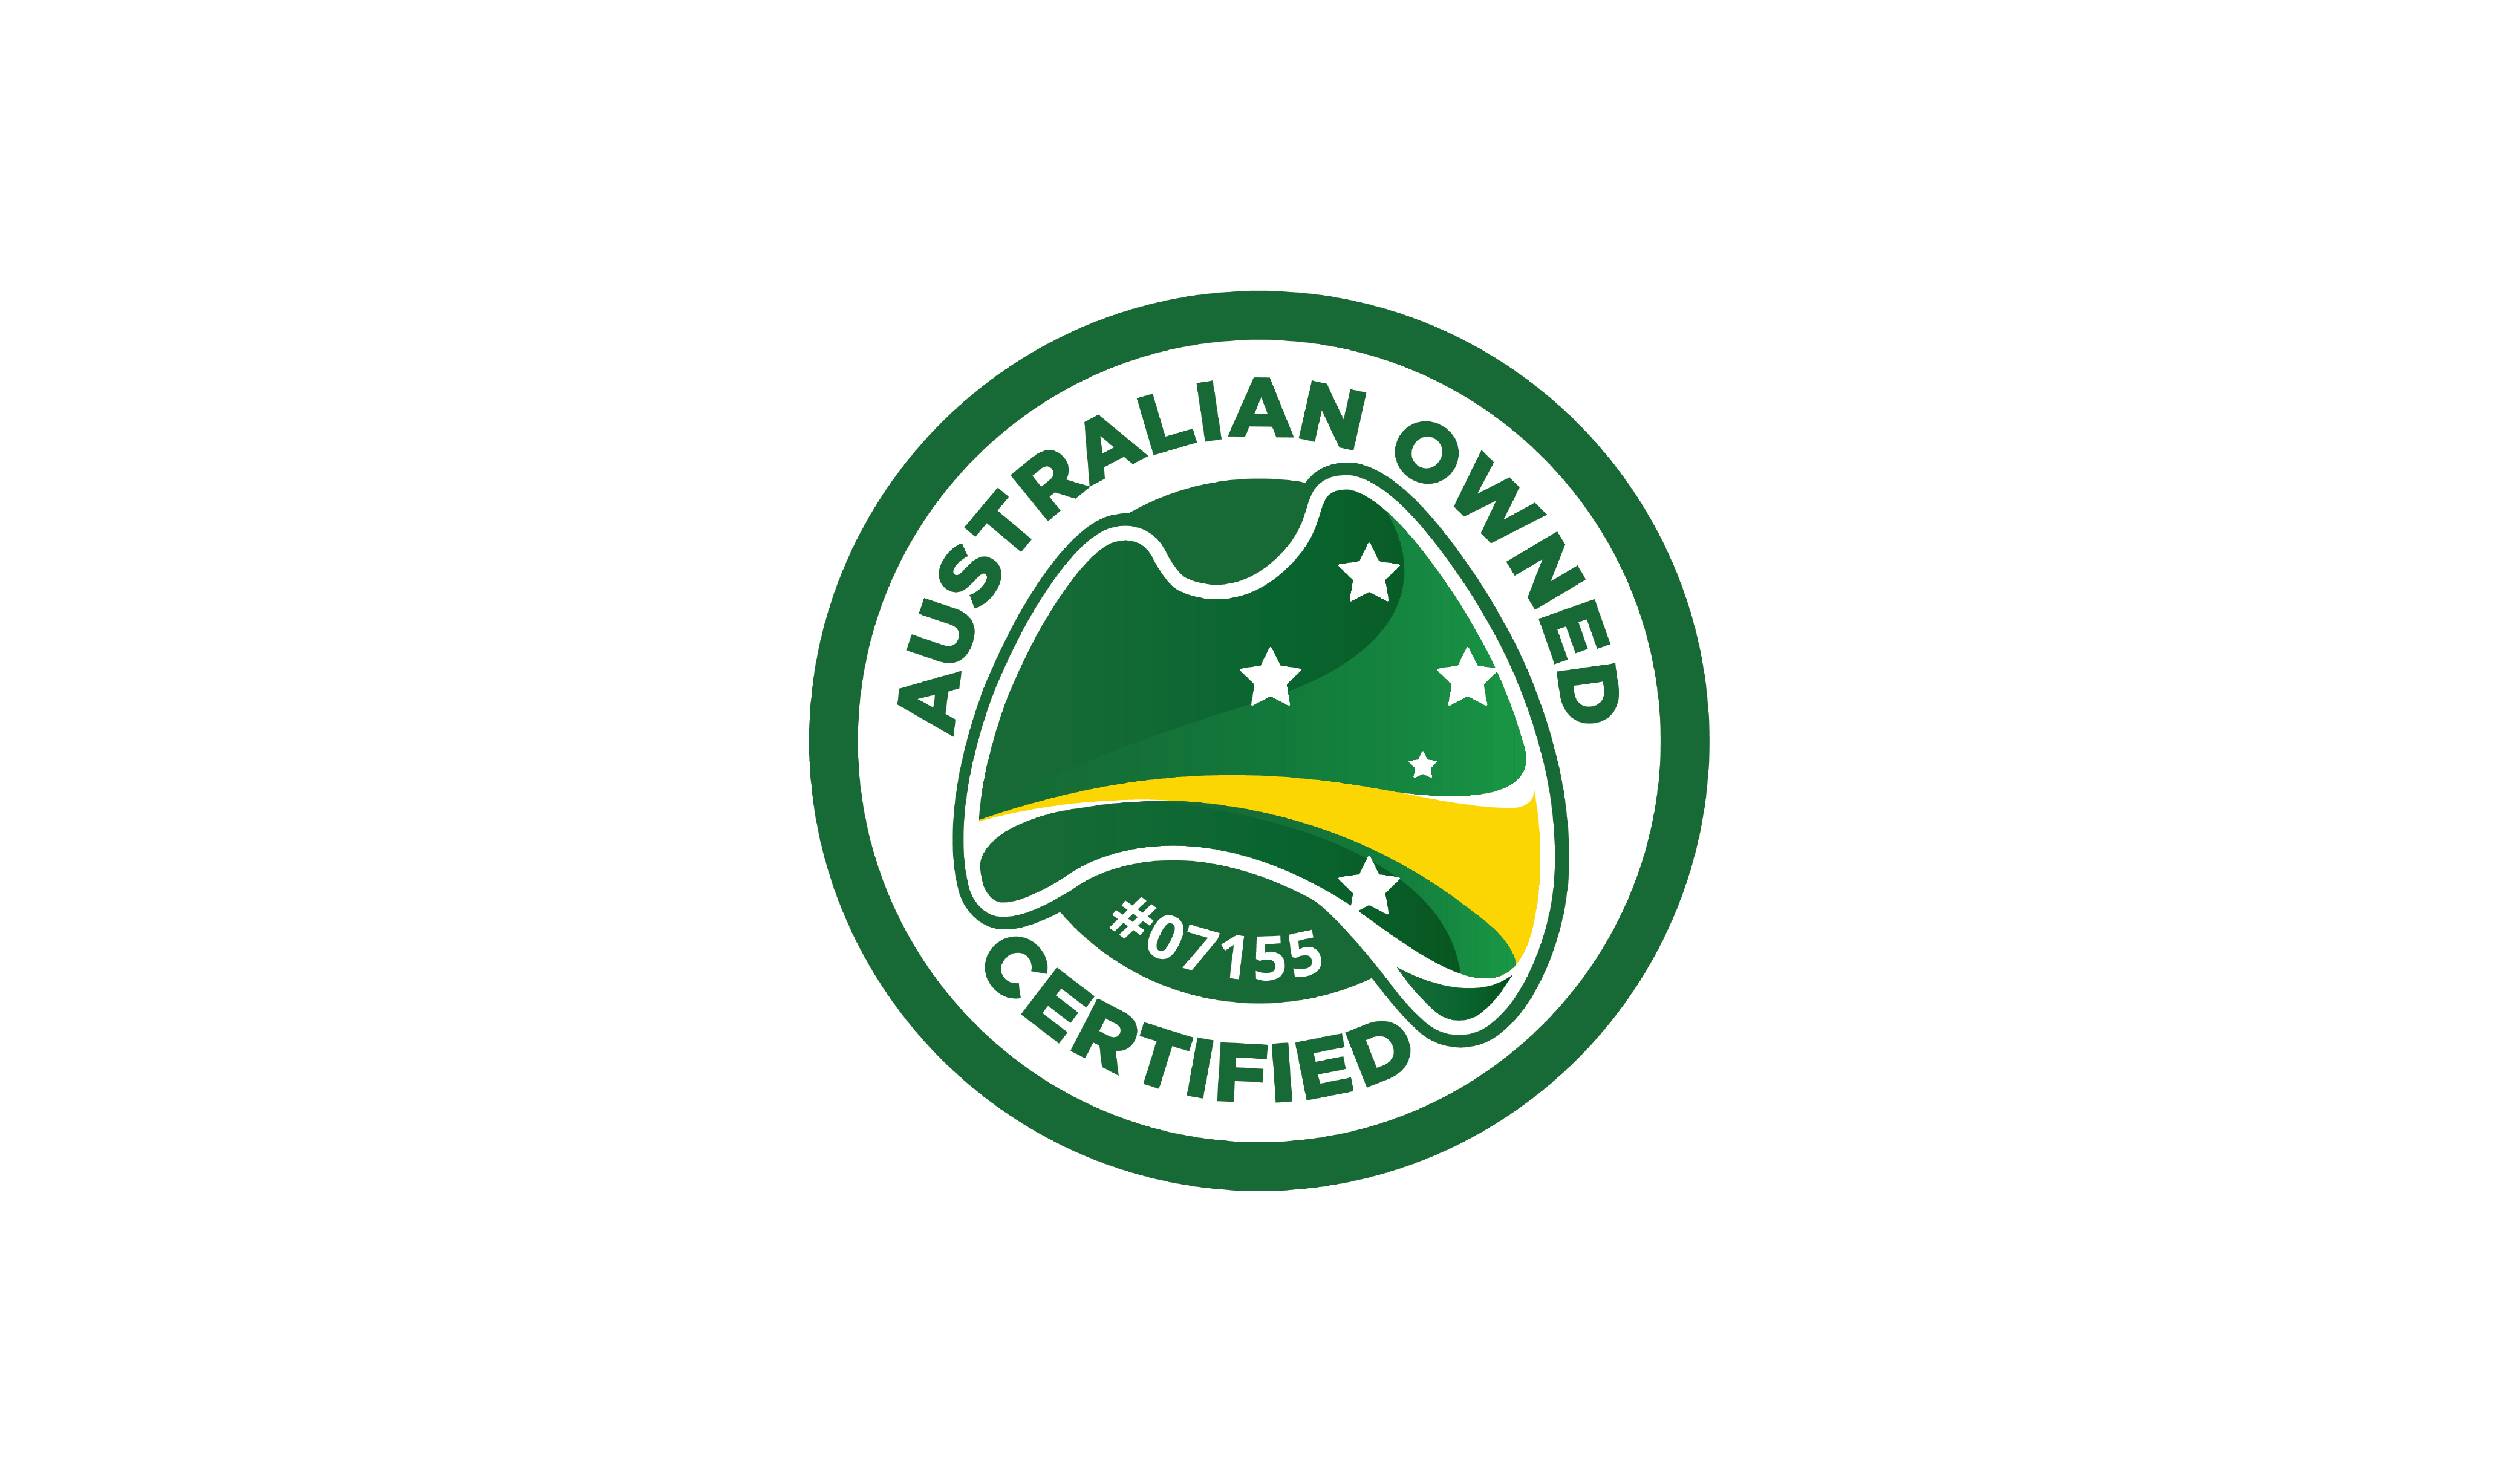 Certification_Australian Owned